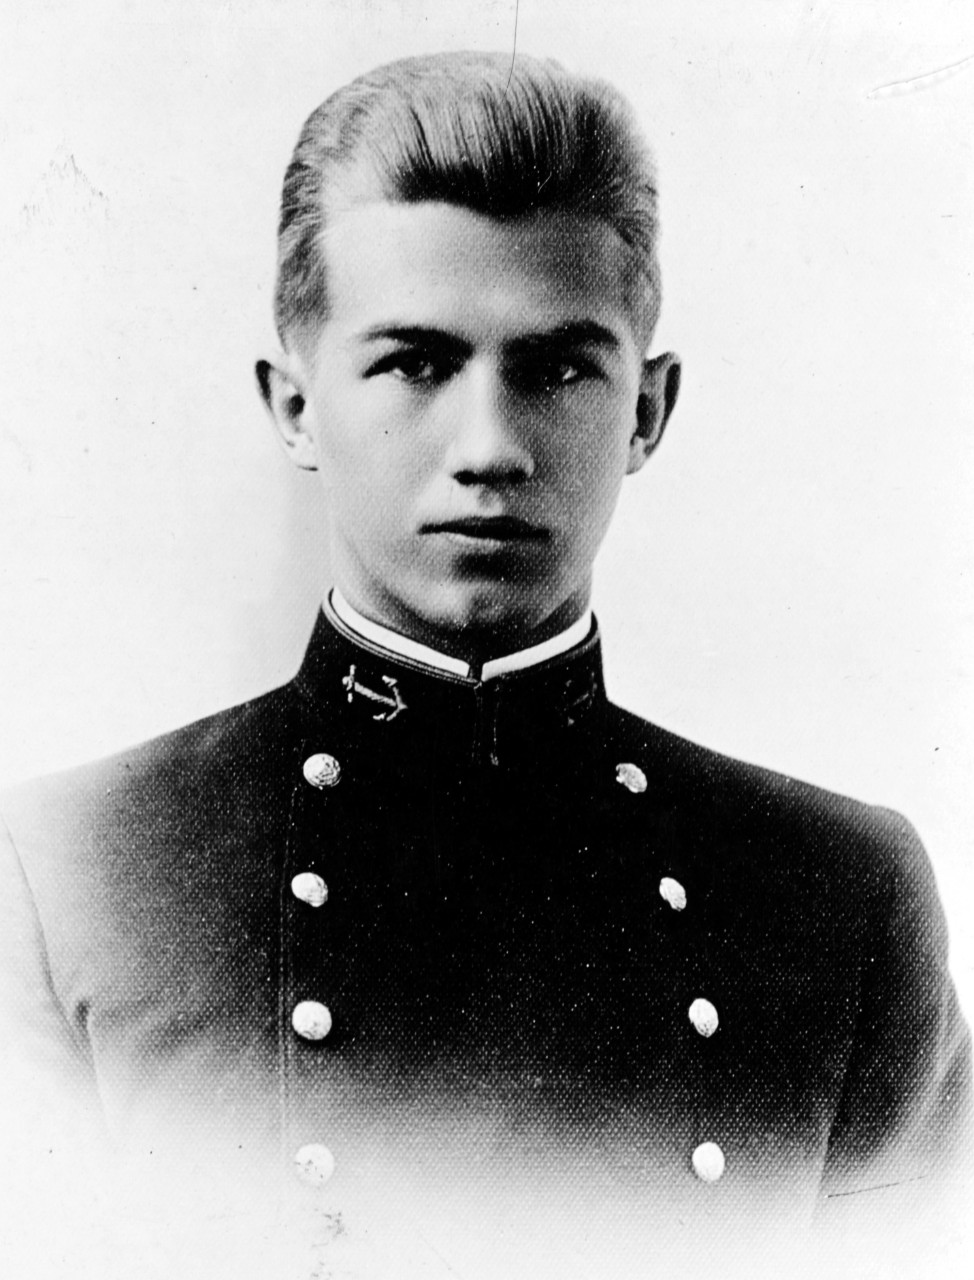 Photo #: NH 48684  Midshipman Stanton F. Kalk, USN (1894-1917)